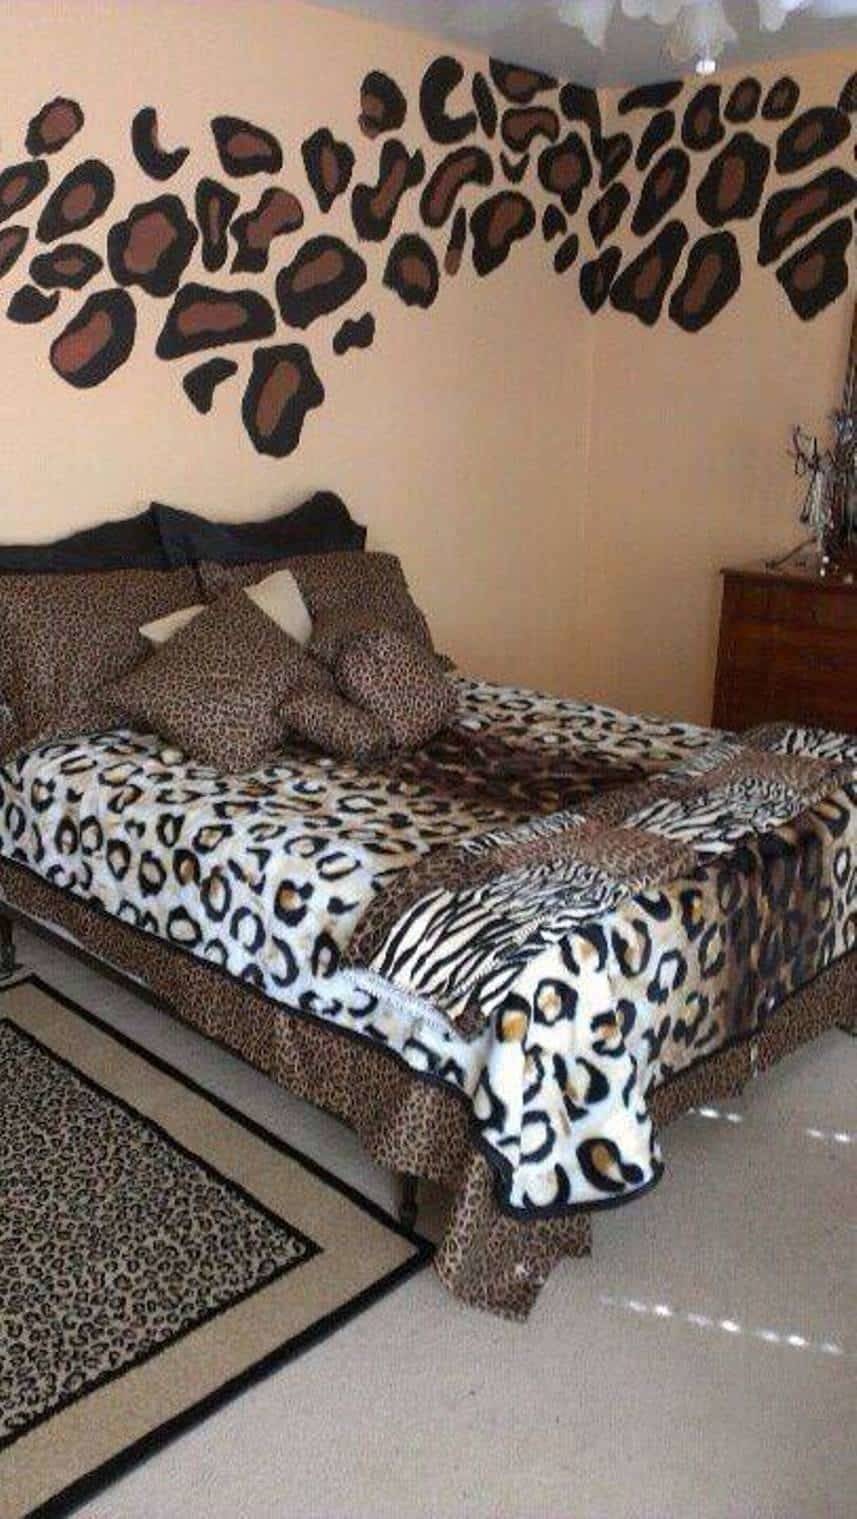 Комната в леопардовом стиле